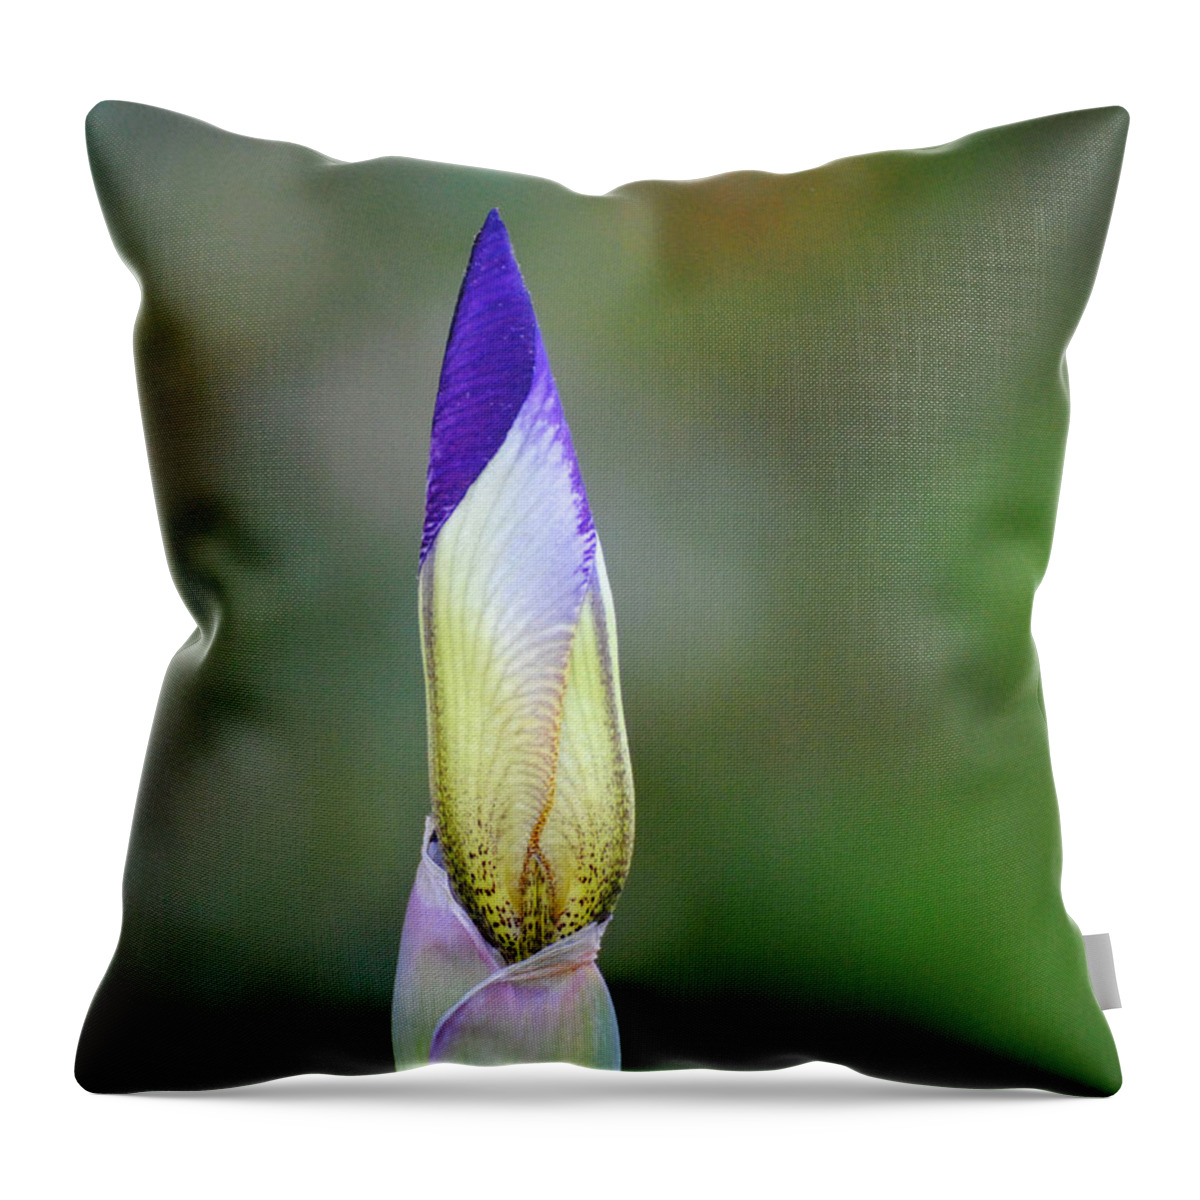 Beautiful Iris Throw Pillow featuring the photograph Purple and Yellow Iris Flower Bud by Jai Johnson